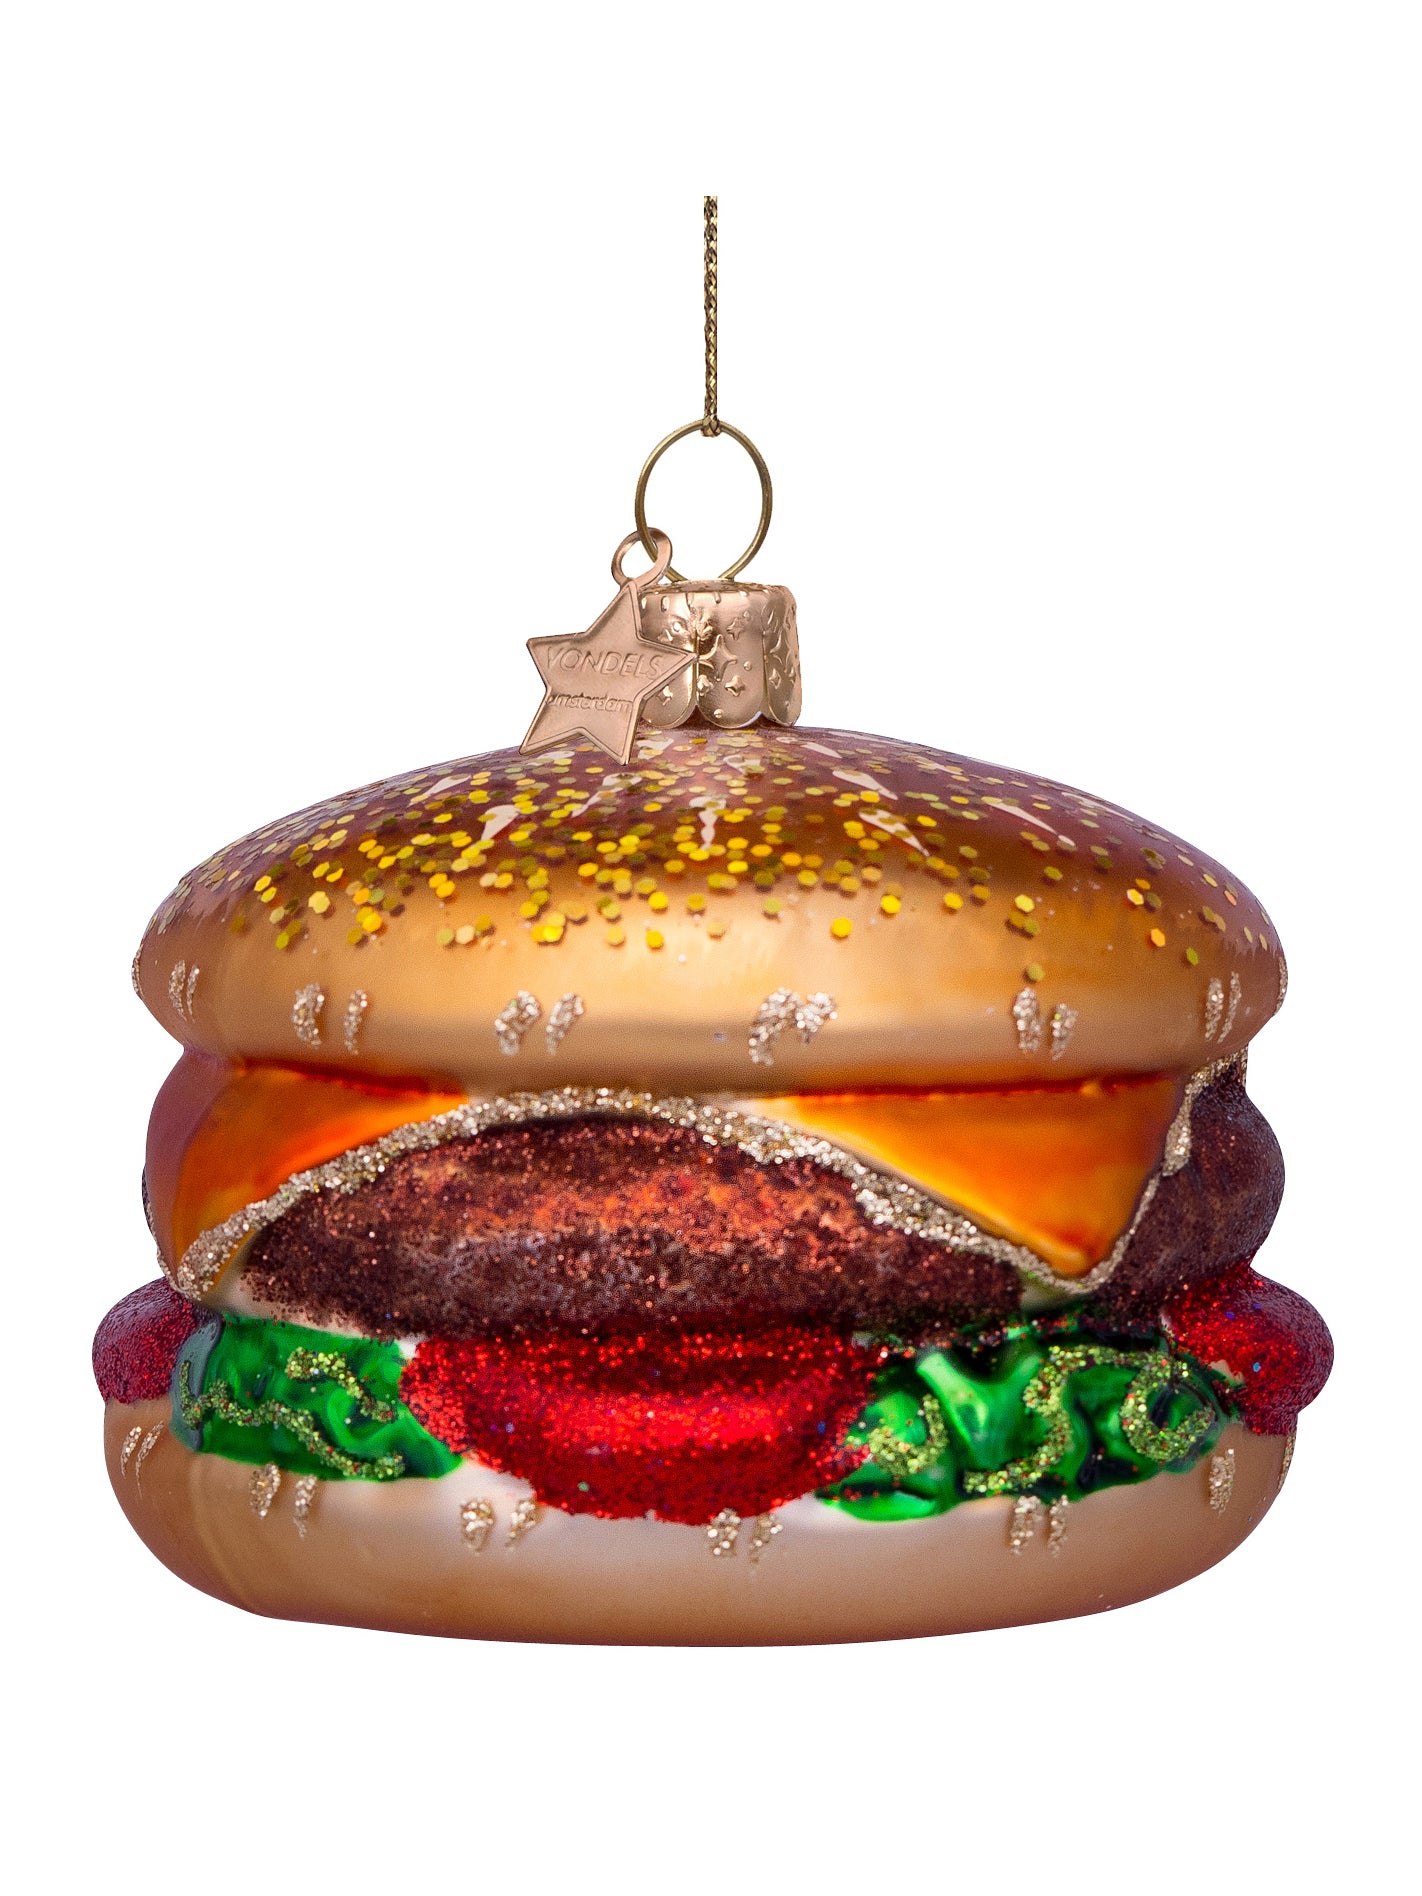 Hamburger glass ornament